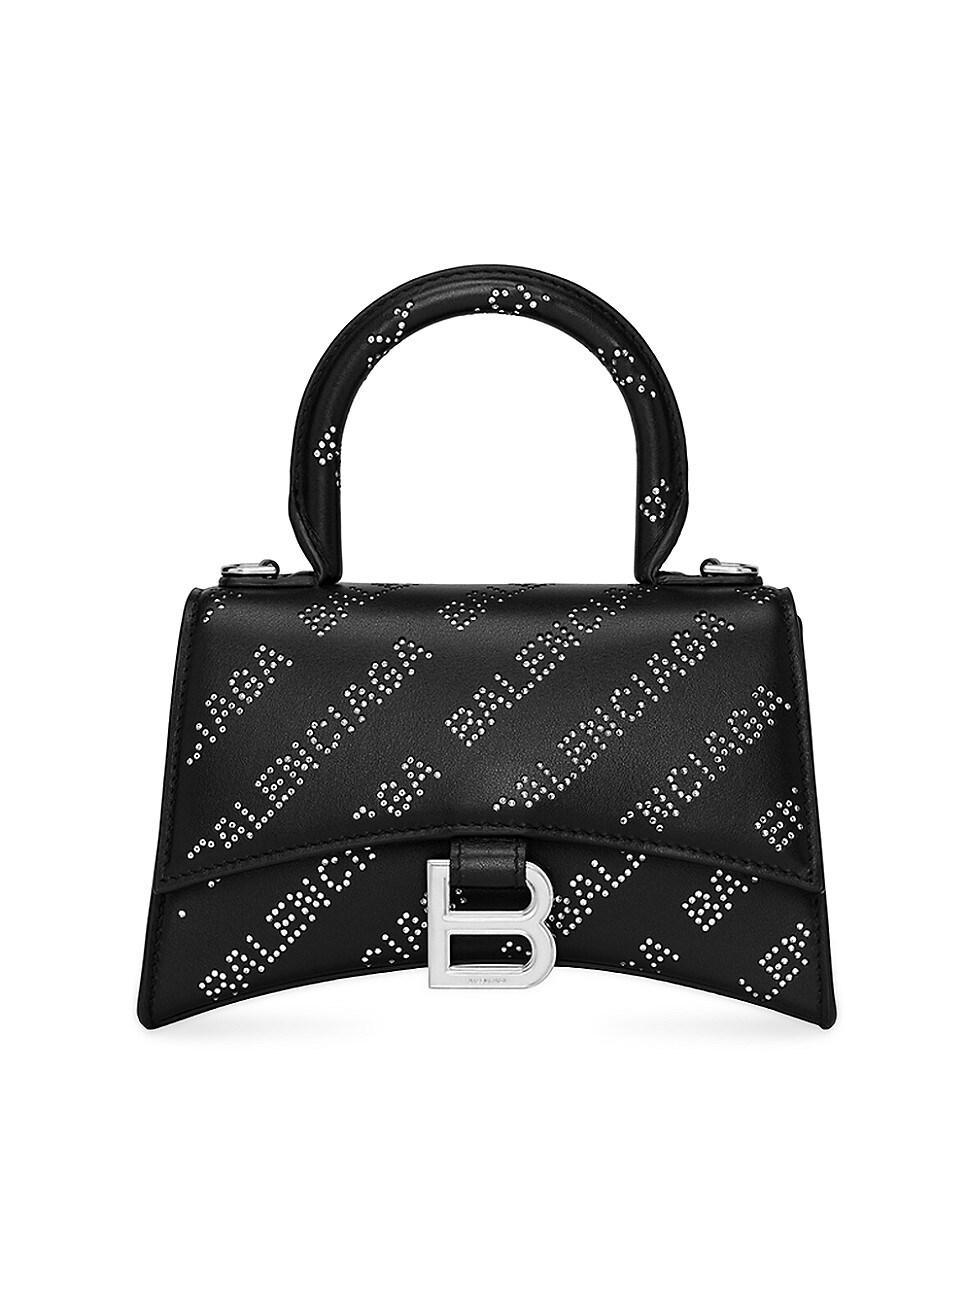 Womens Hourglass XS Handbag with Rhinestones Product Image